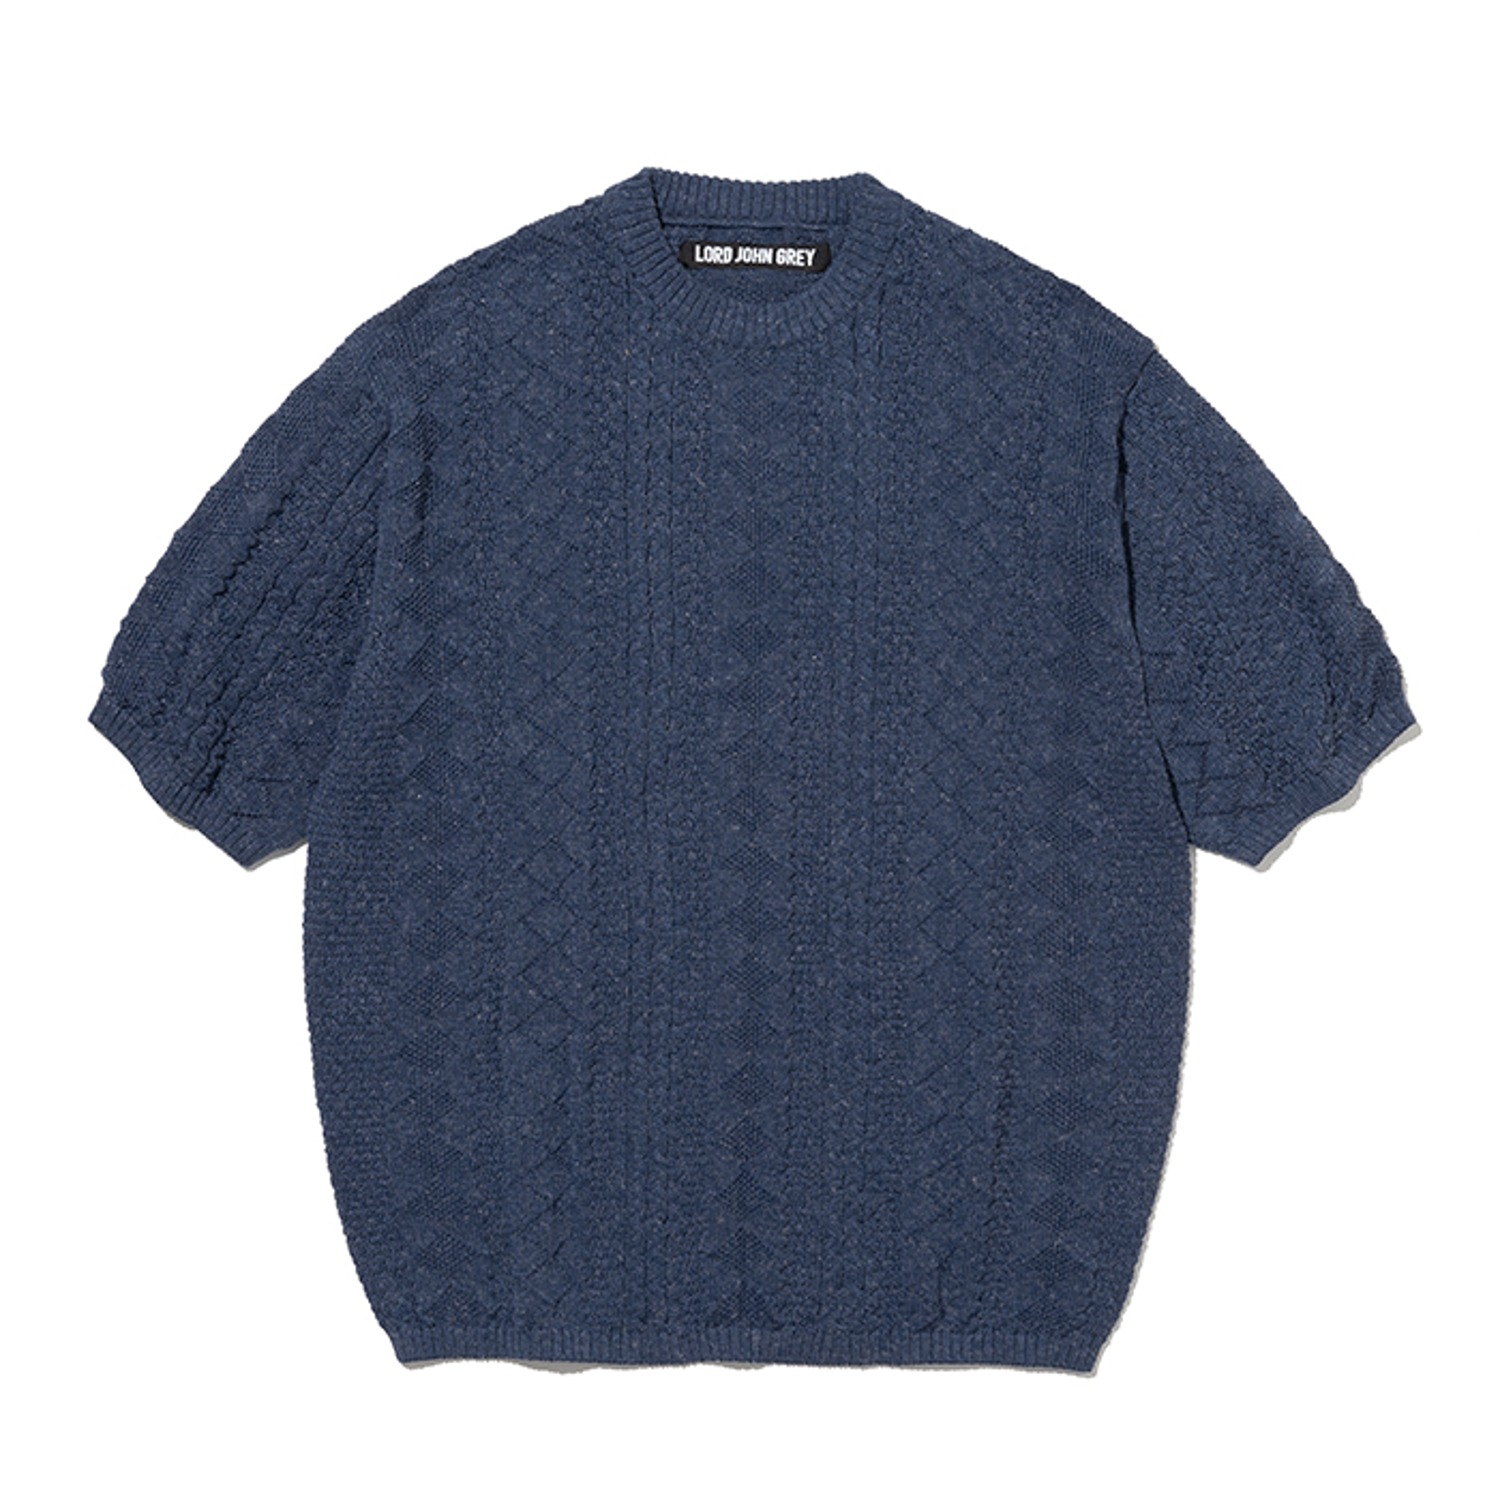 argyle short sleeve knit prussian blue